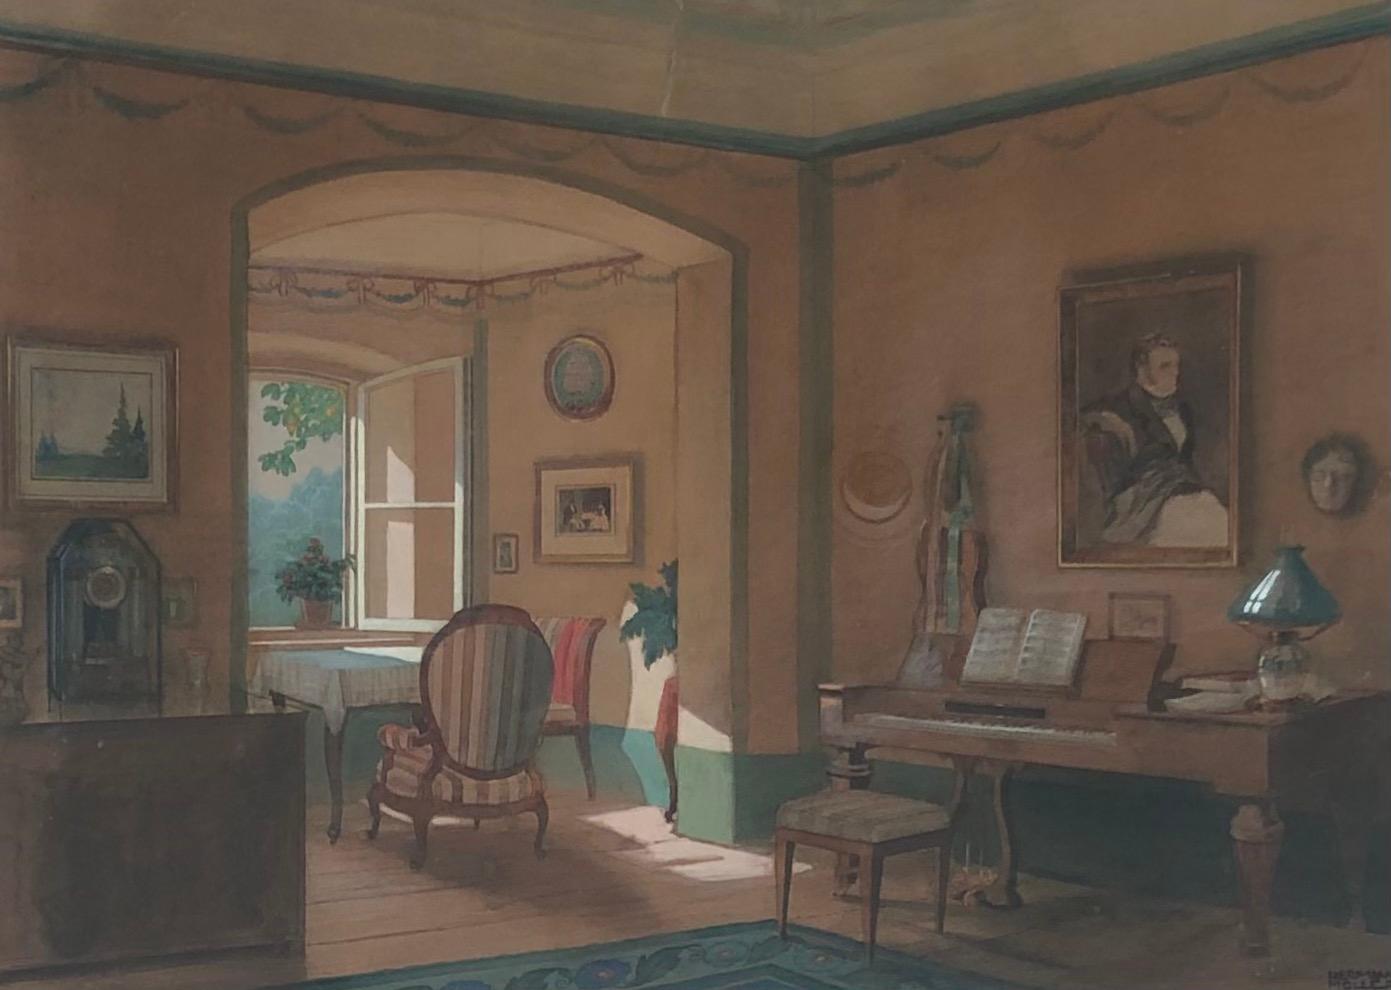 Interieur des 19. Jahrhunderts